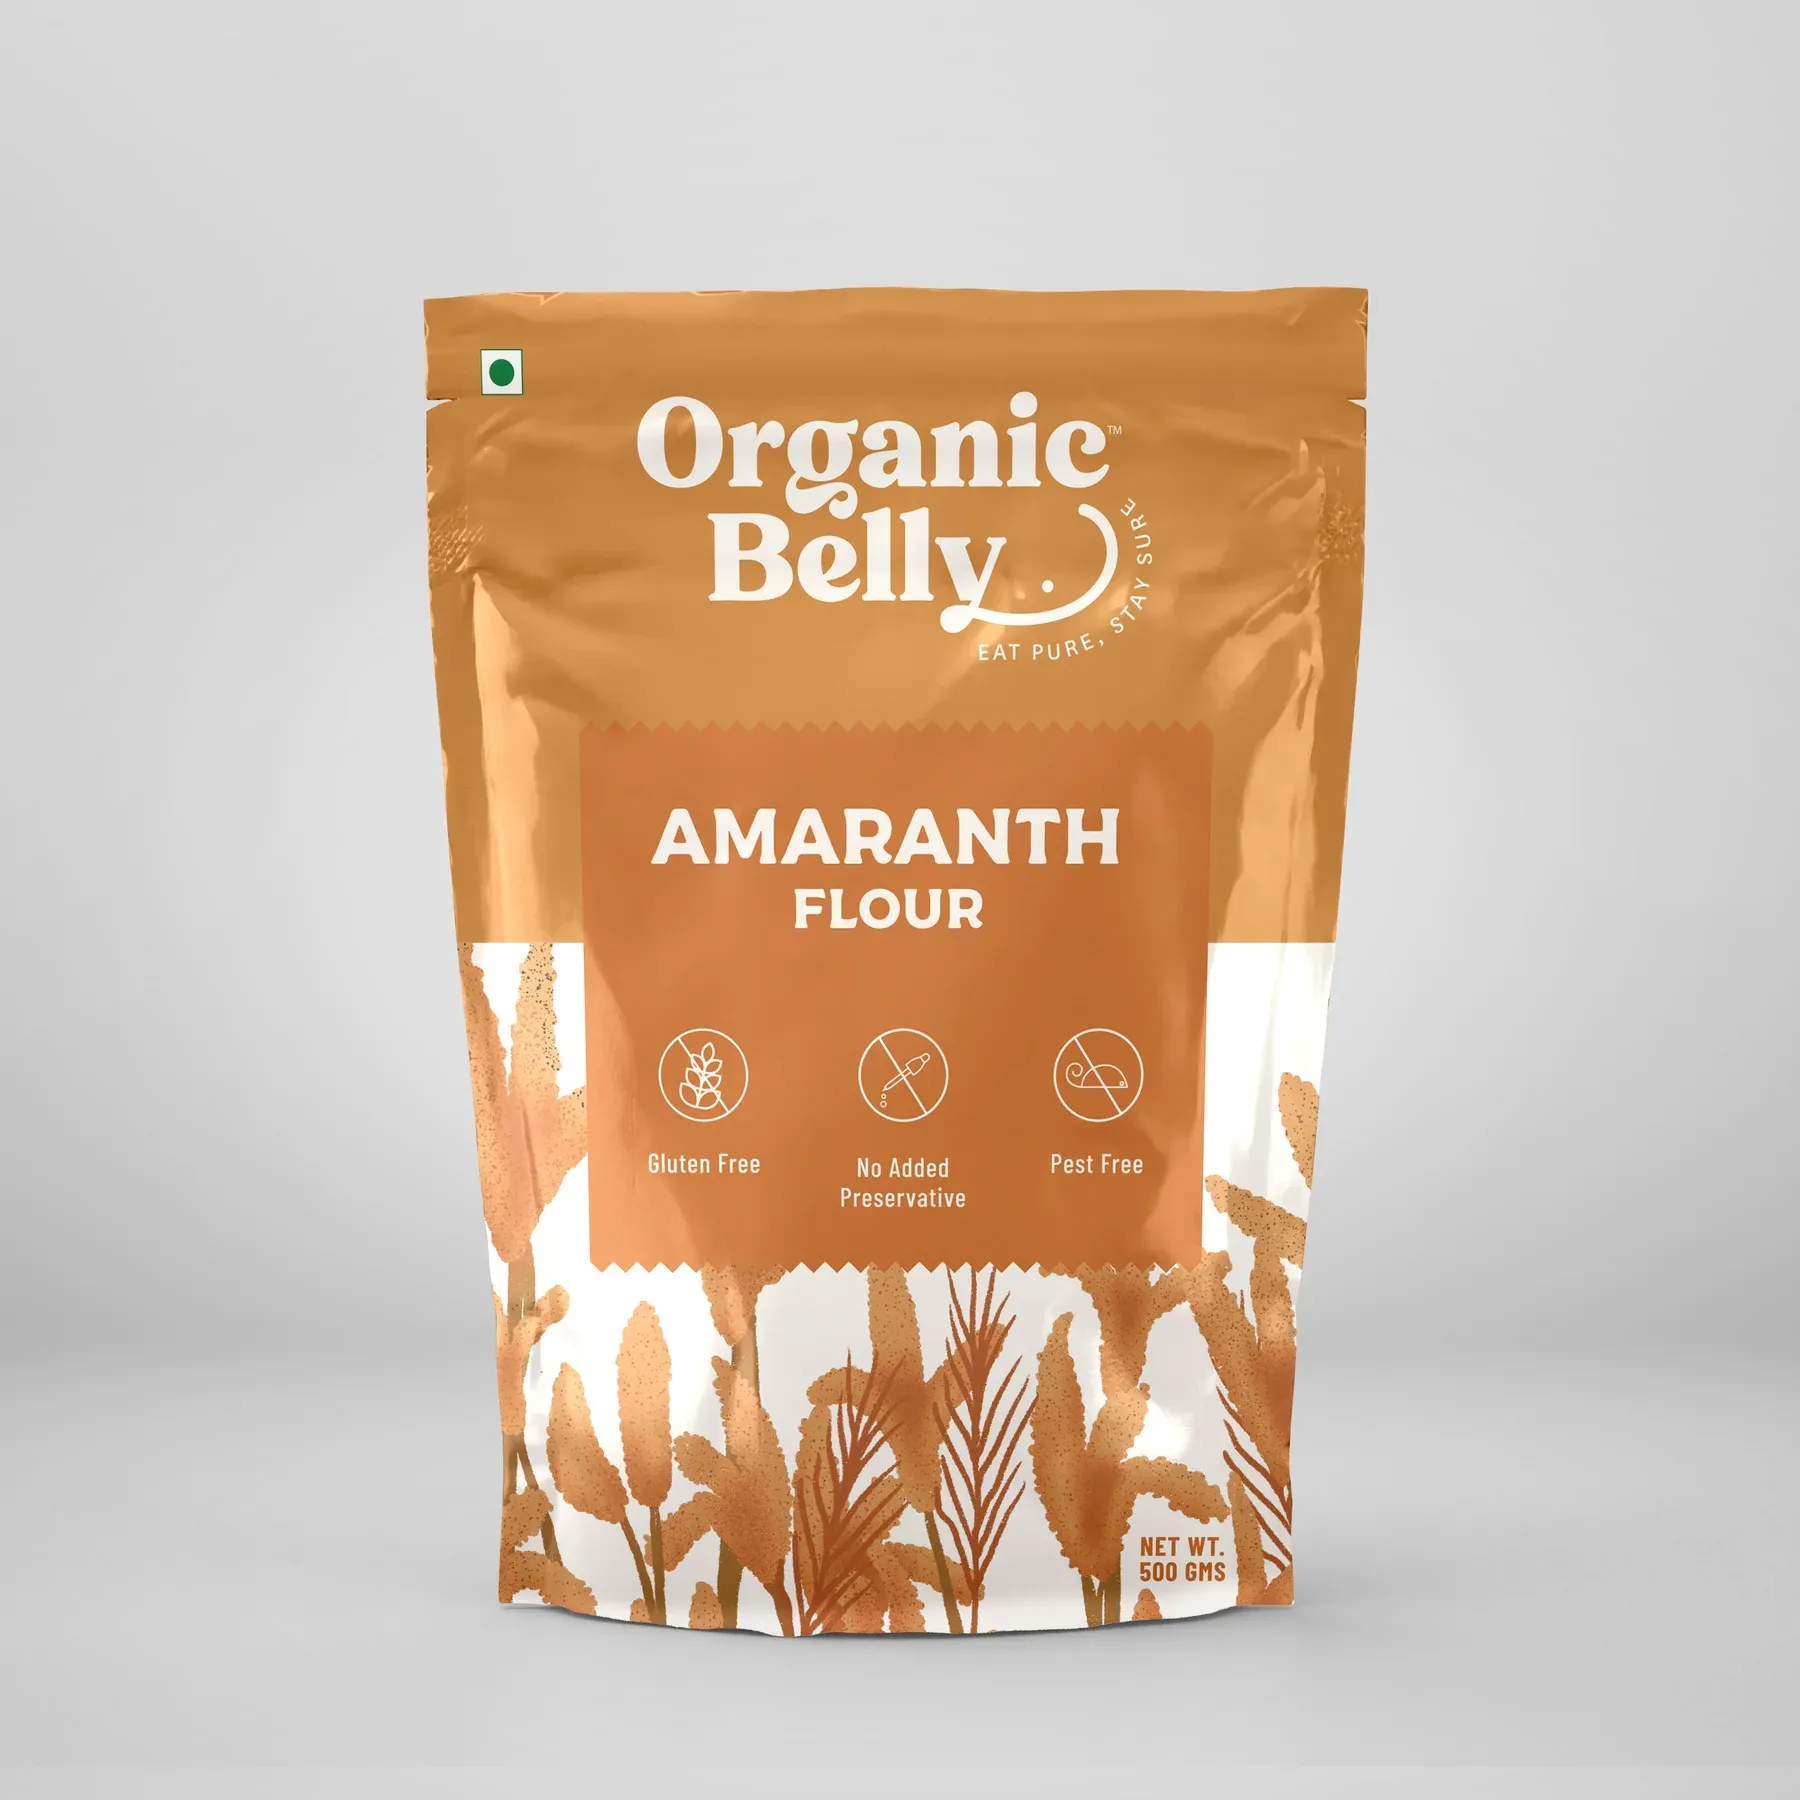 Organic Belly Amaranth Flour Image